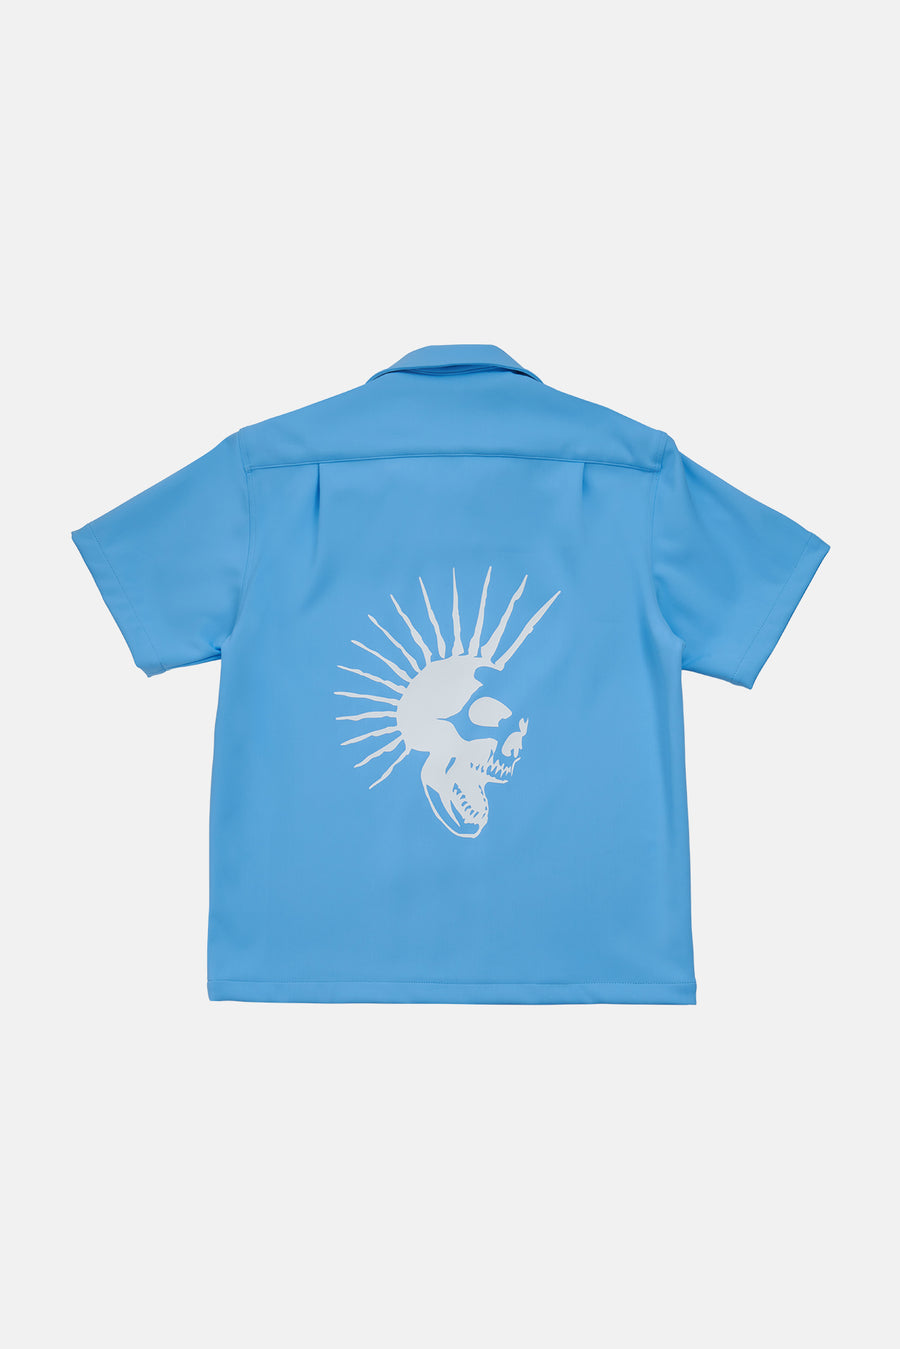 Neoprene Camp Shirt Columbia Blue - blueandcream